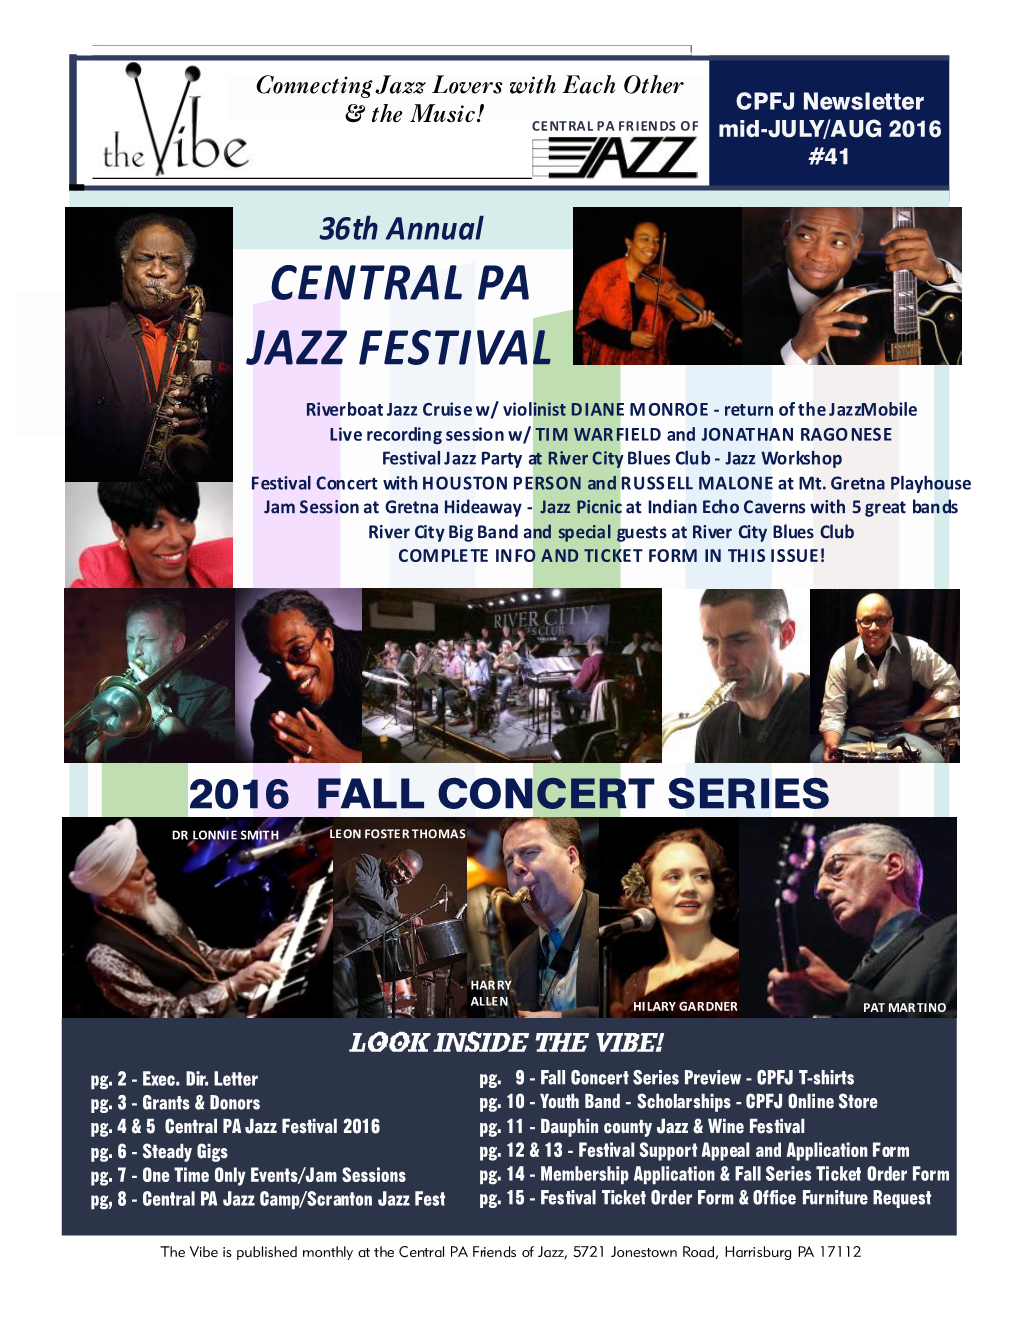 Central Pa Jazz Festival